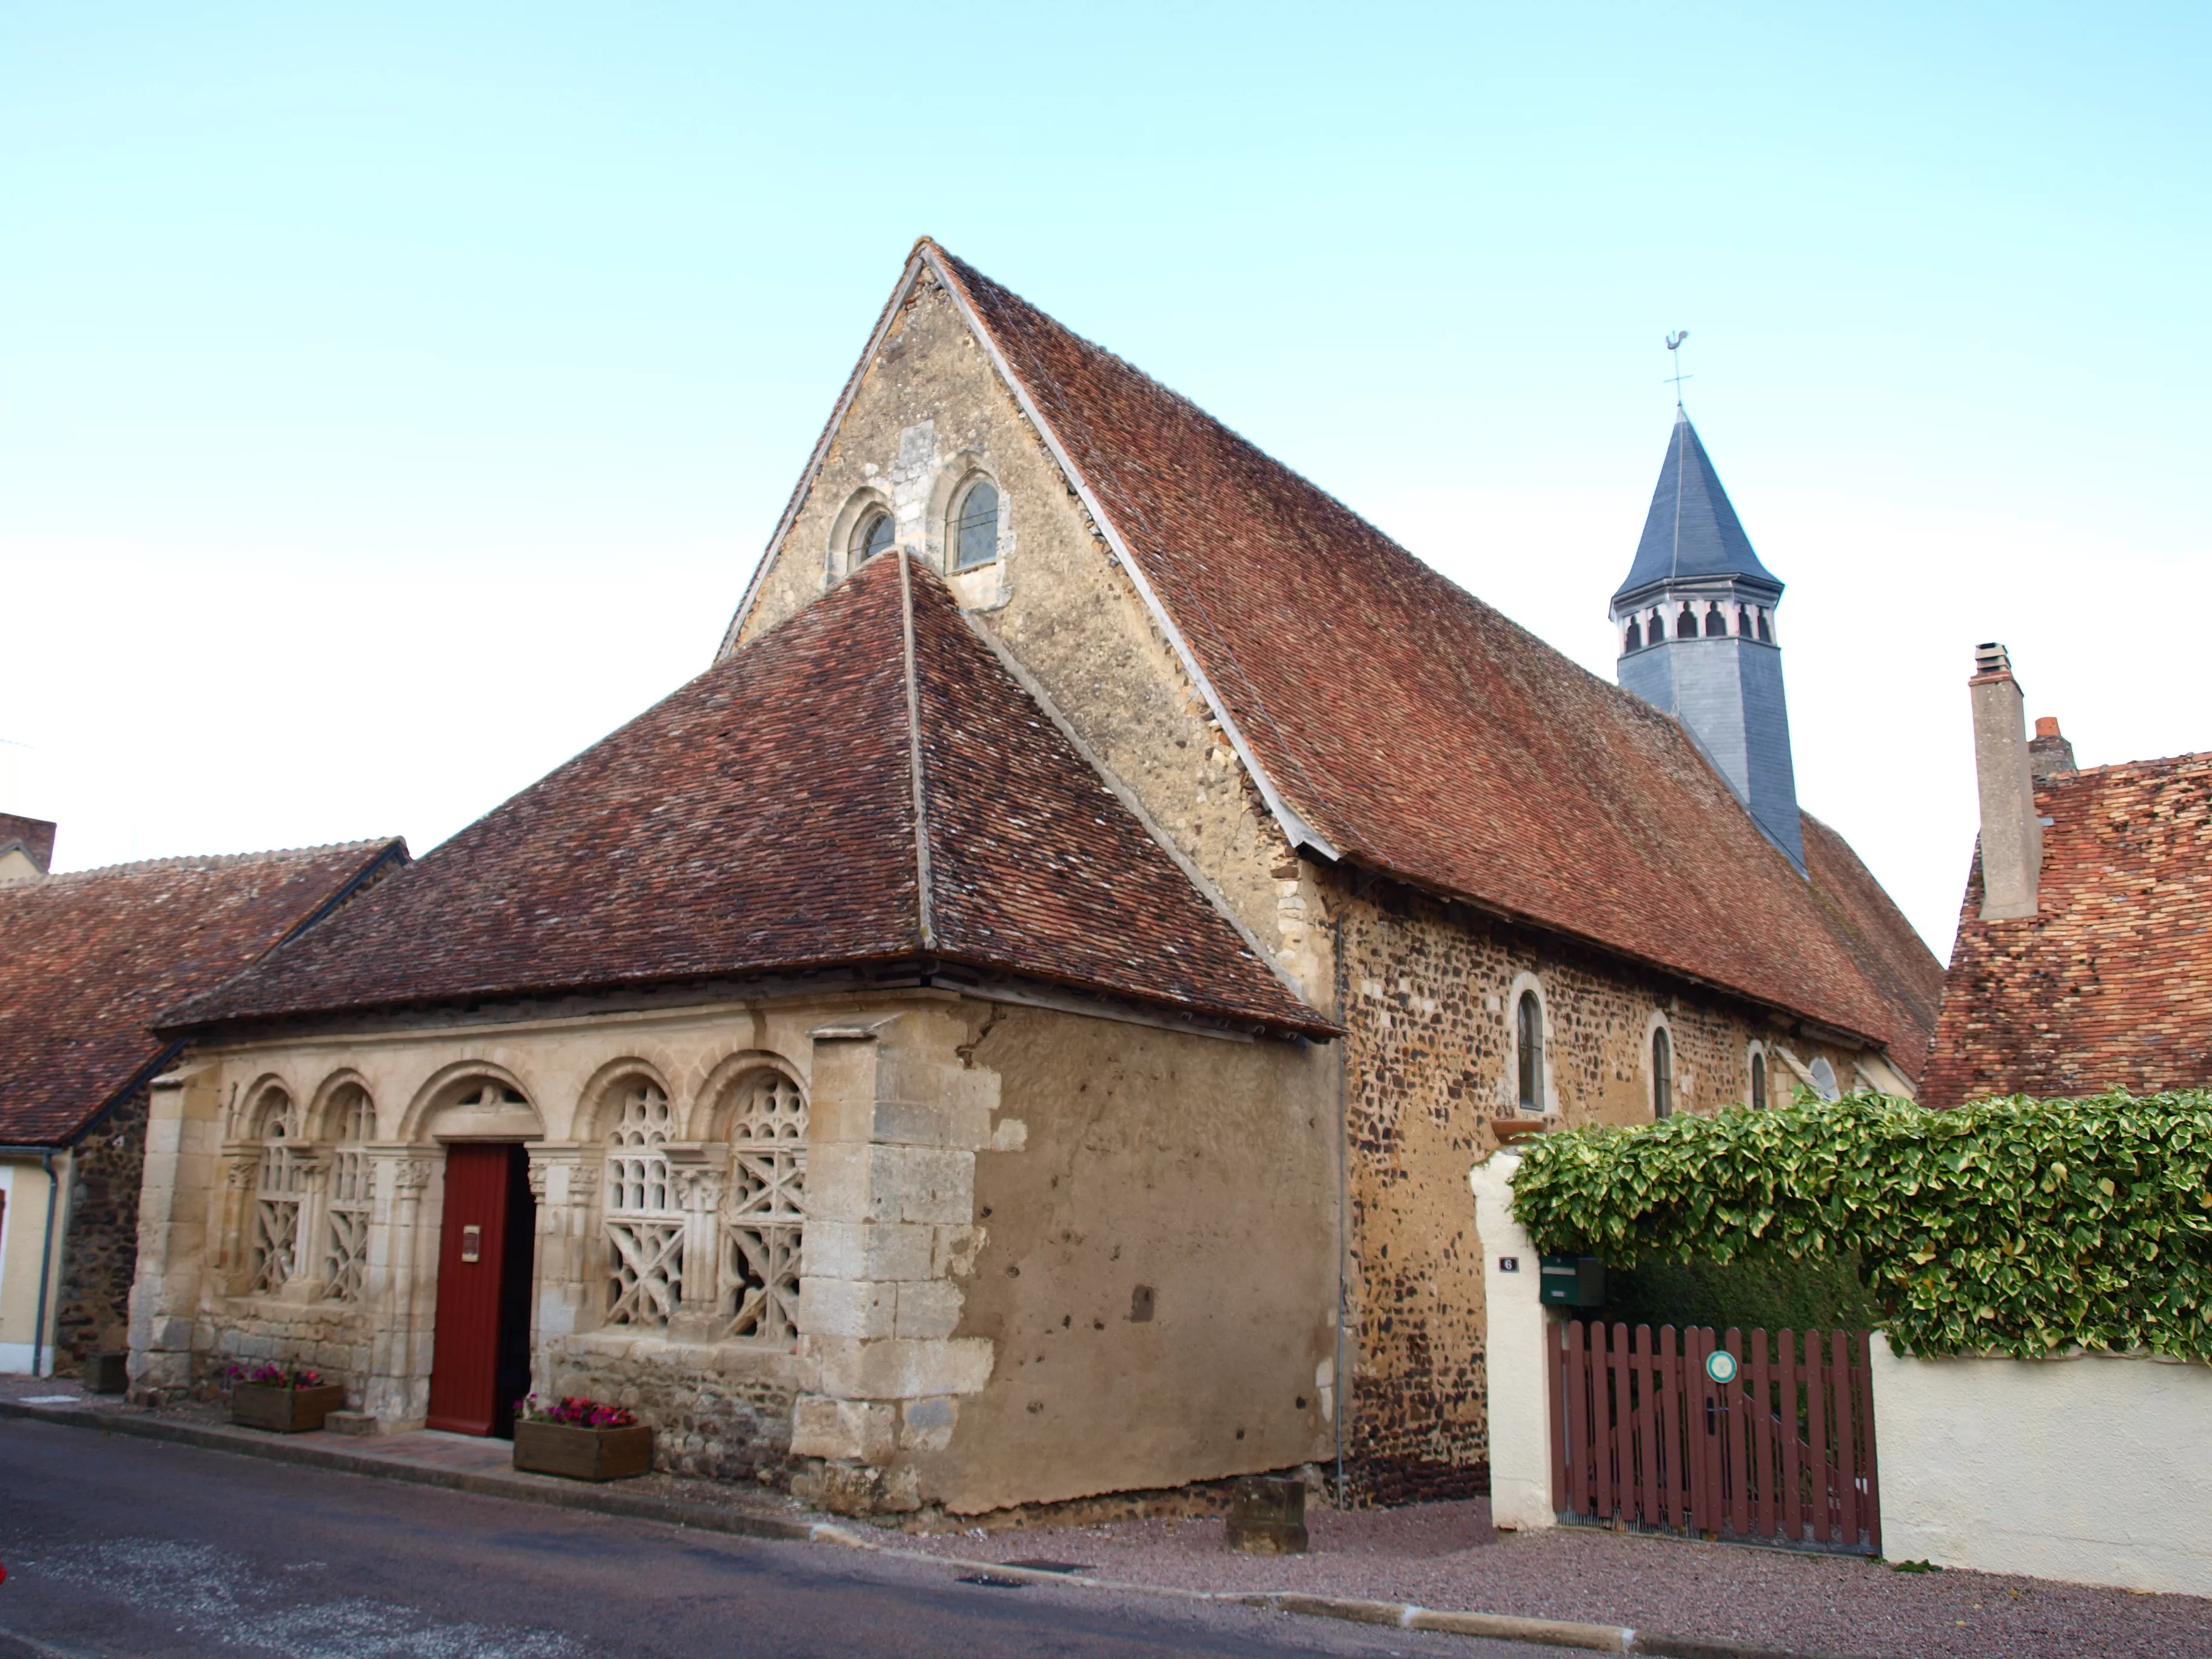 Eglise de Saint Pierre in France, Europe | Architecture - Rated 0.9